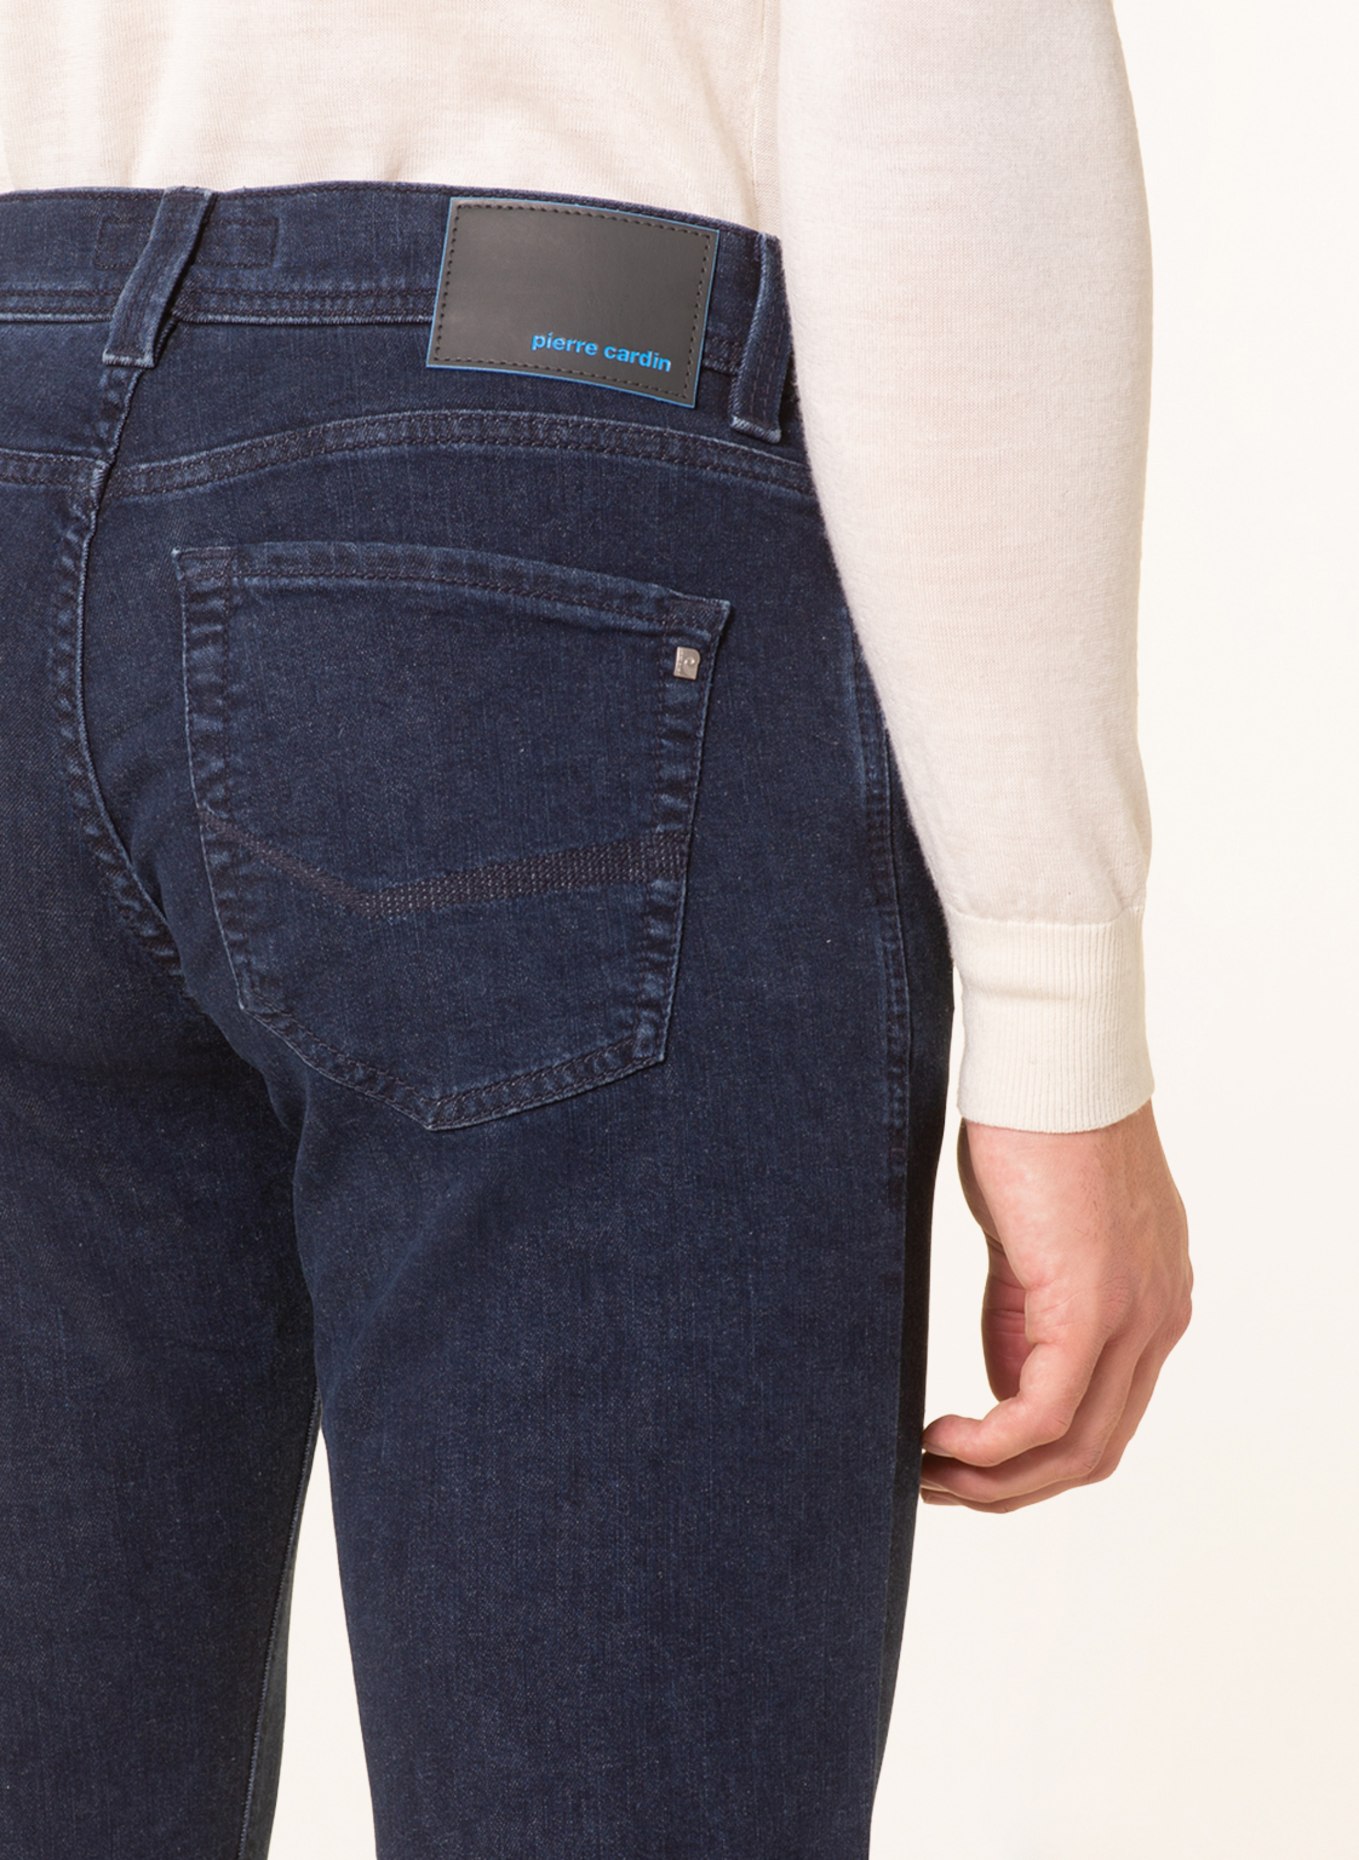 pierre cardin Jeans LYON TAPERED Modern Fit , Farbe: 6821 blue stonewash (Bild 5)